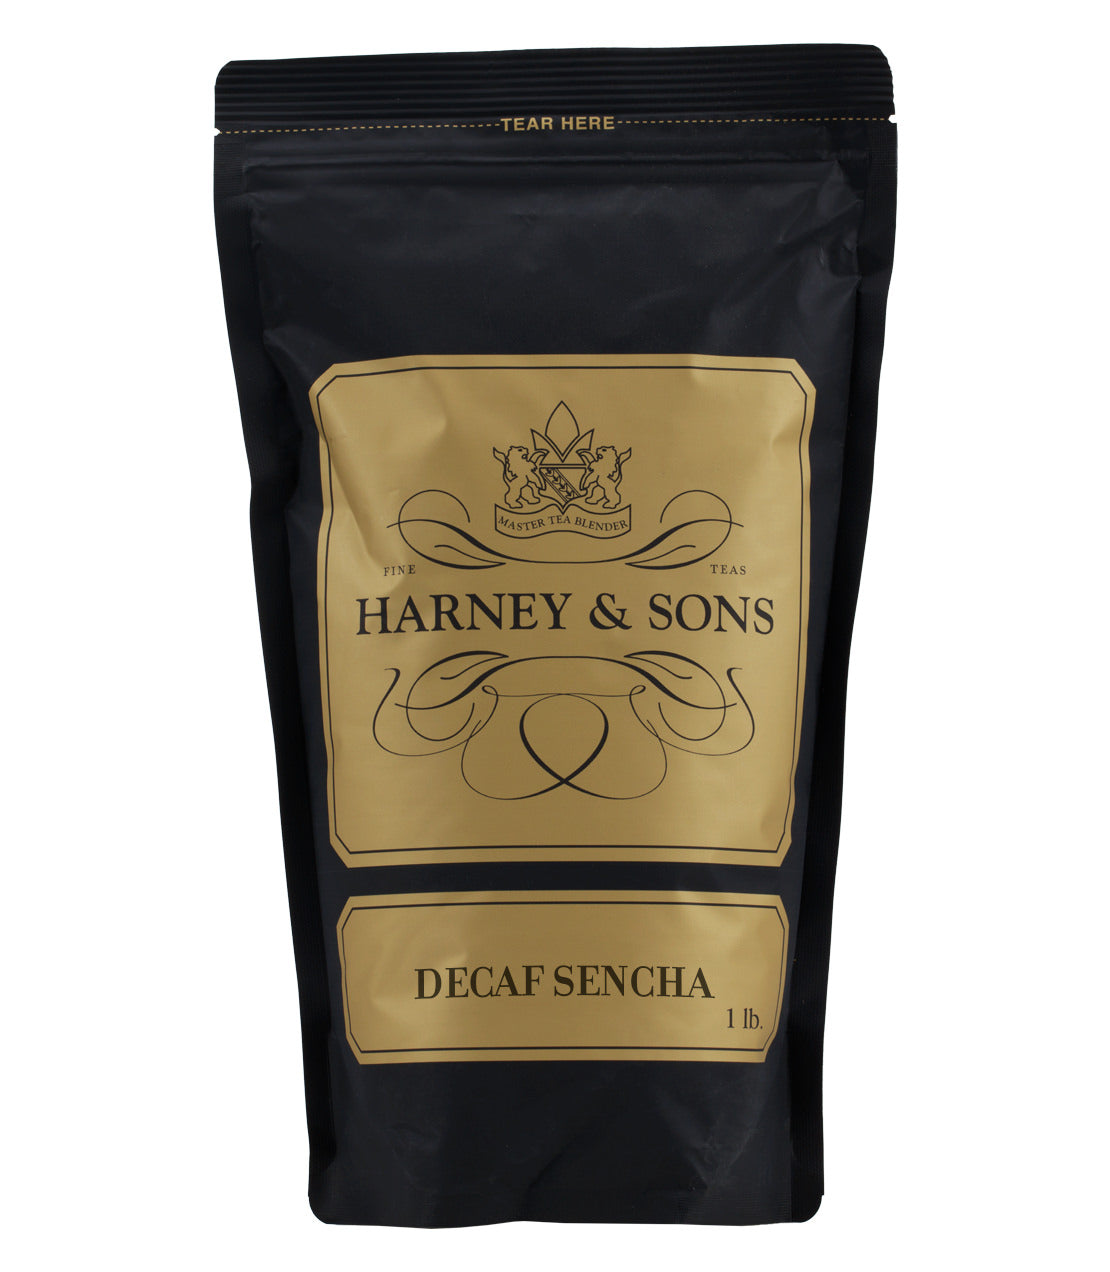 Decaf Sencha - Loose 1 lb. Bag - Harney & Sons Fine Teas